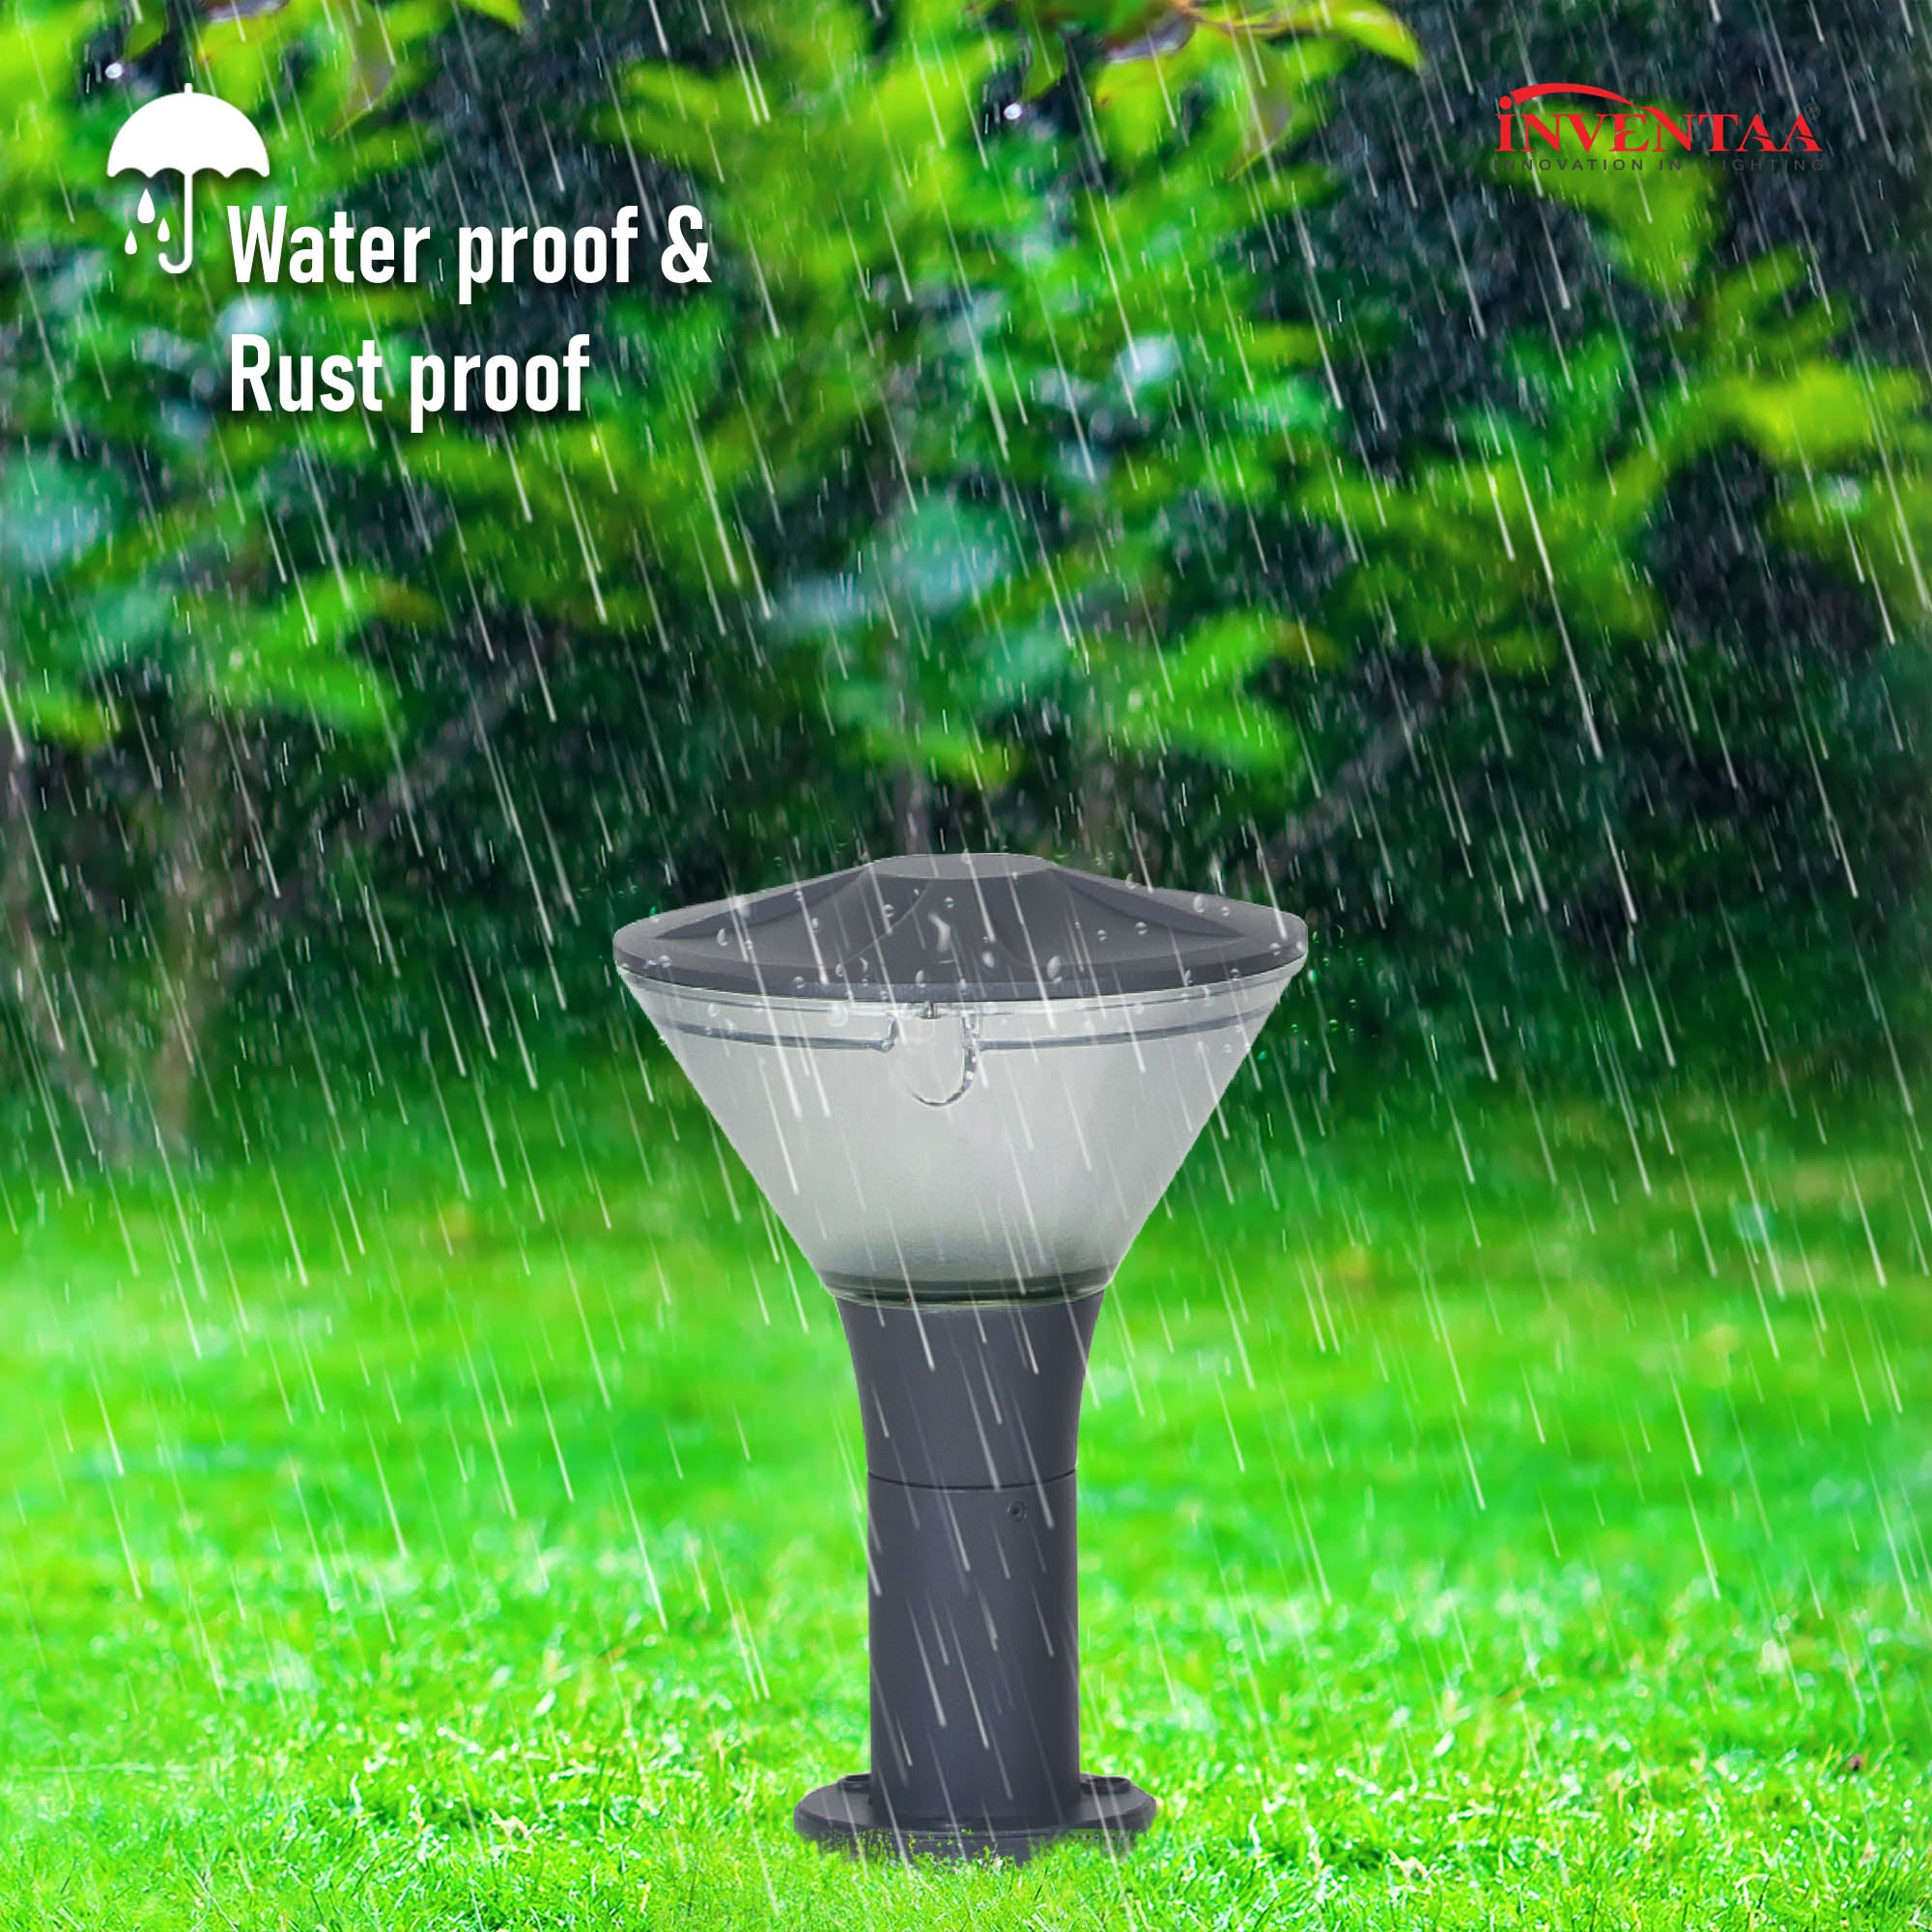 Yash 2 feet led garden bollard light featuring its rustproof and waterproof resistance for outdoor lighting use #size_2 feet